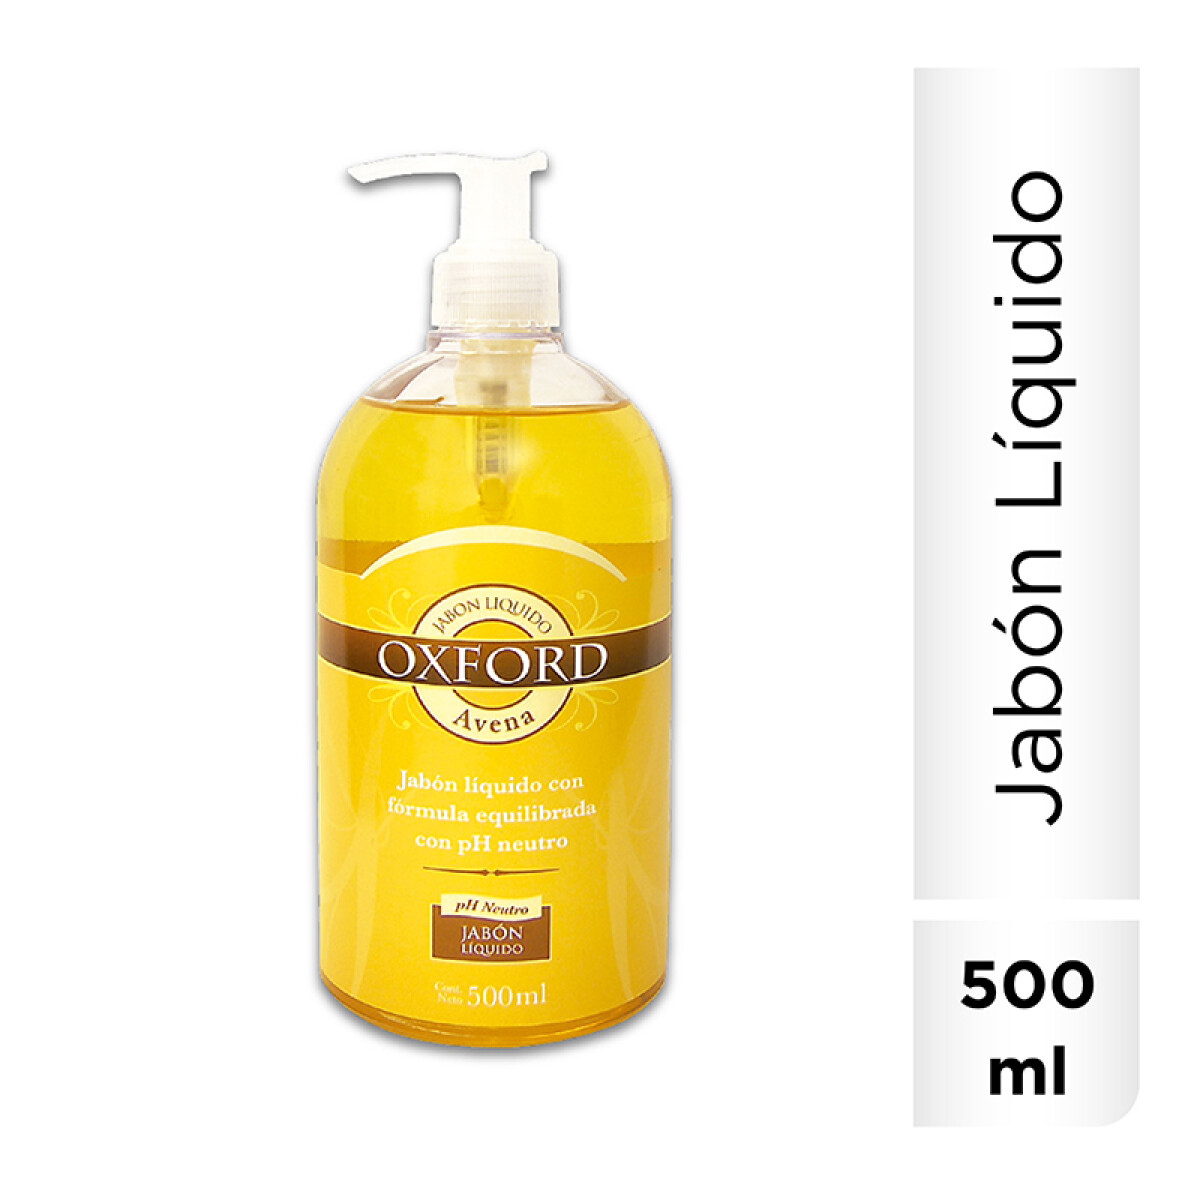 Oxford jabón líquido 500 ml - -Avena 